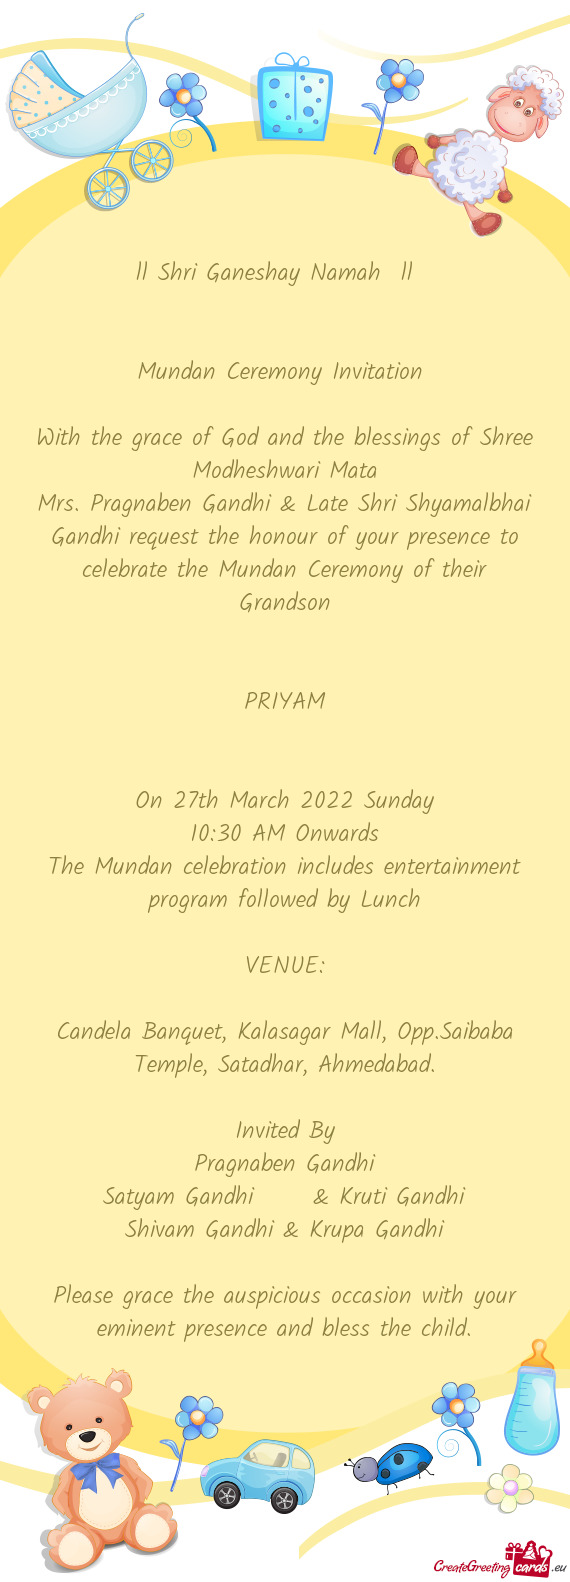 Mrs. Pragnaben Gandhi & Late Shri Shyamalbhai Gandhi request the honour of your presence to celebrat